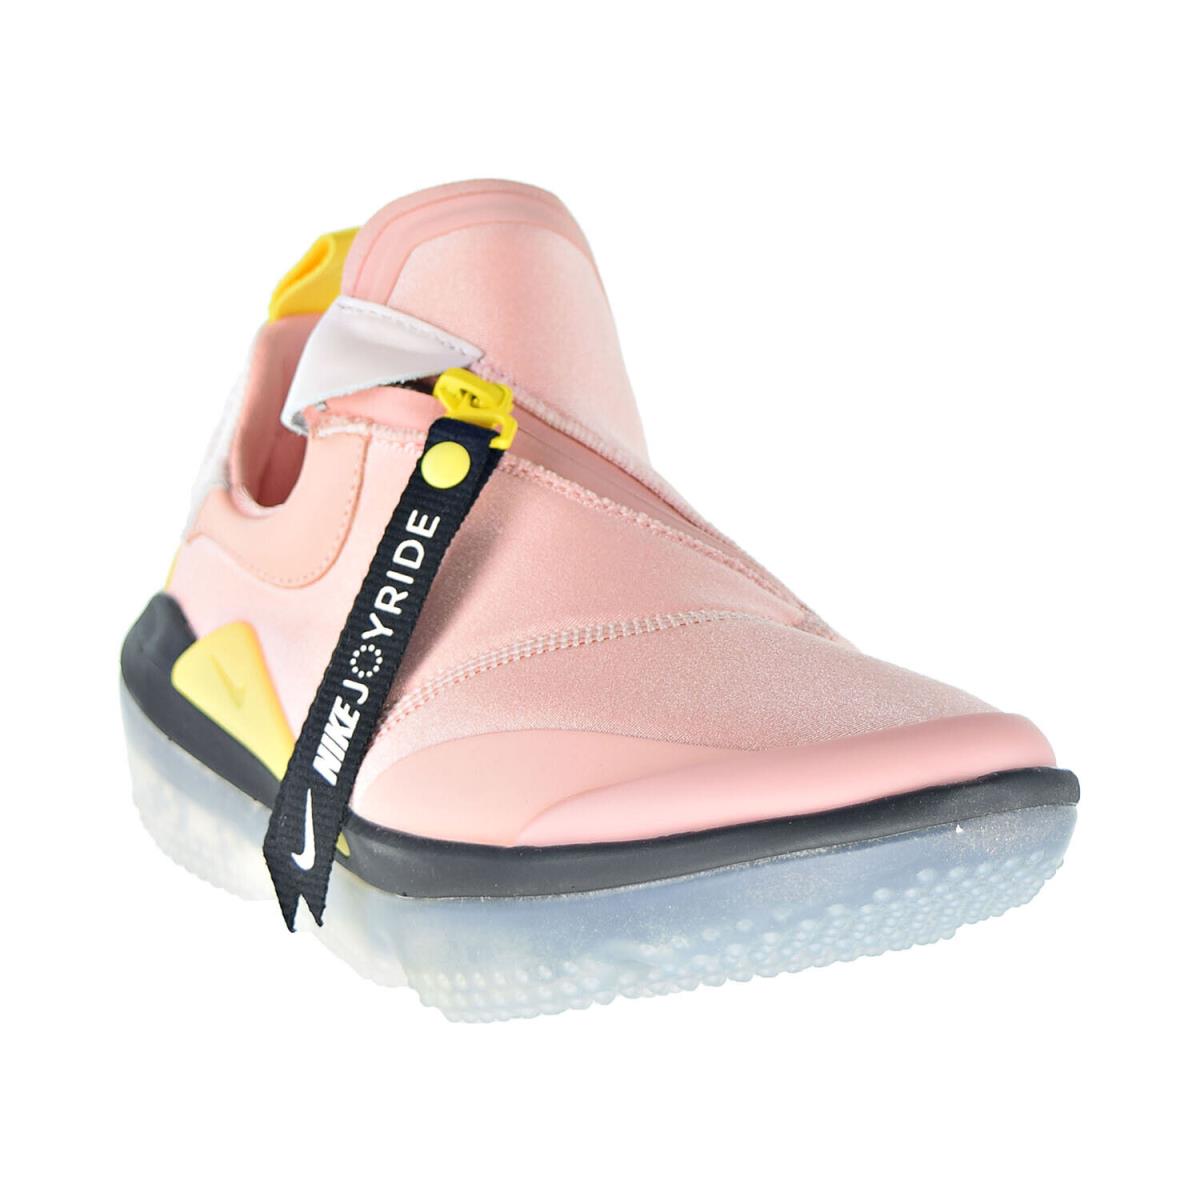 Nike Joyride Optik Women`s Shoes Coral Stardust-chrome Yellow AJ6844-600 - Coral Stardust/Chrome Yellow